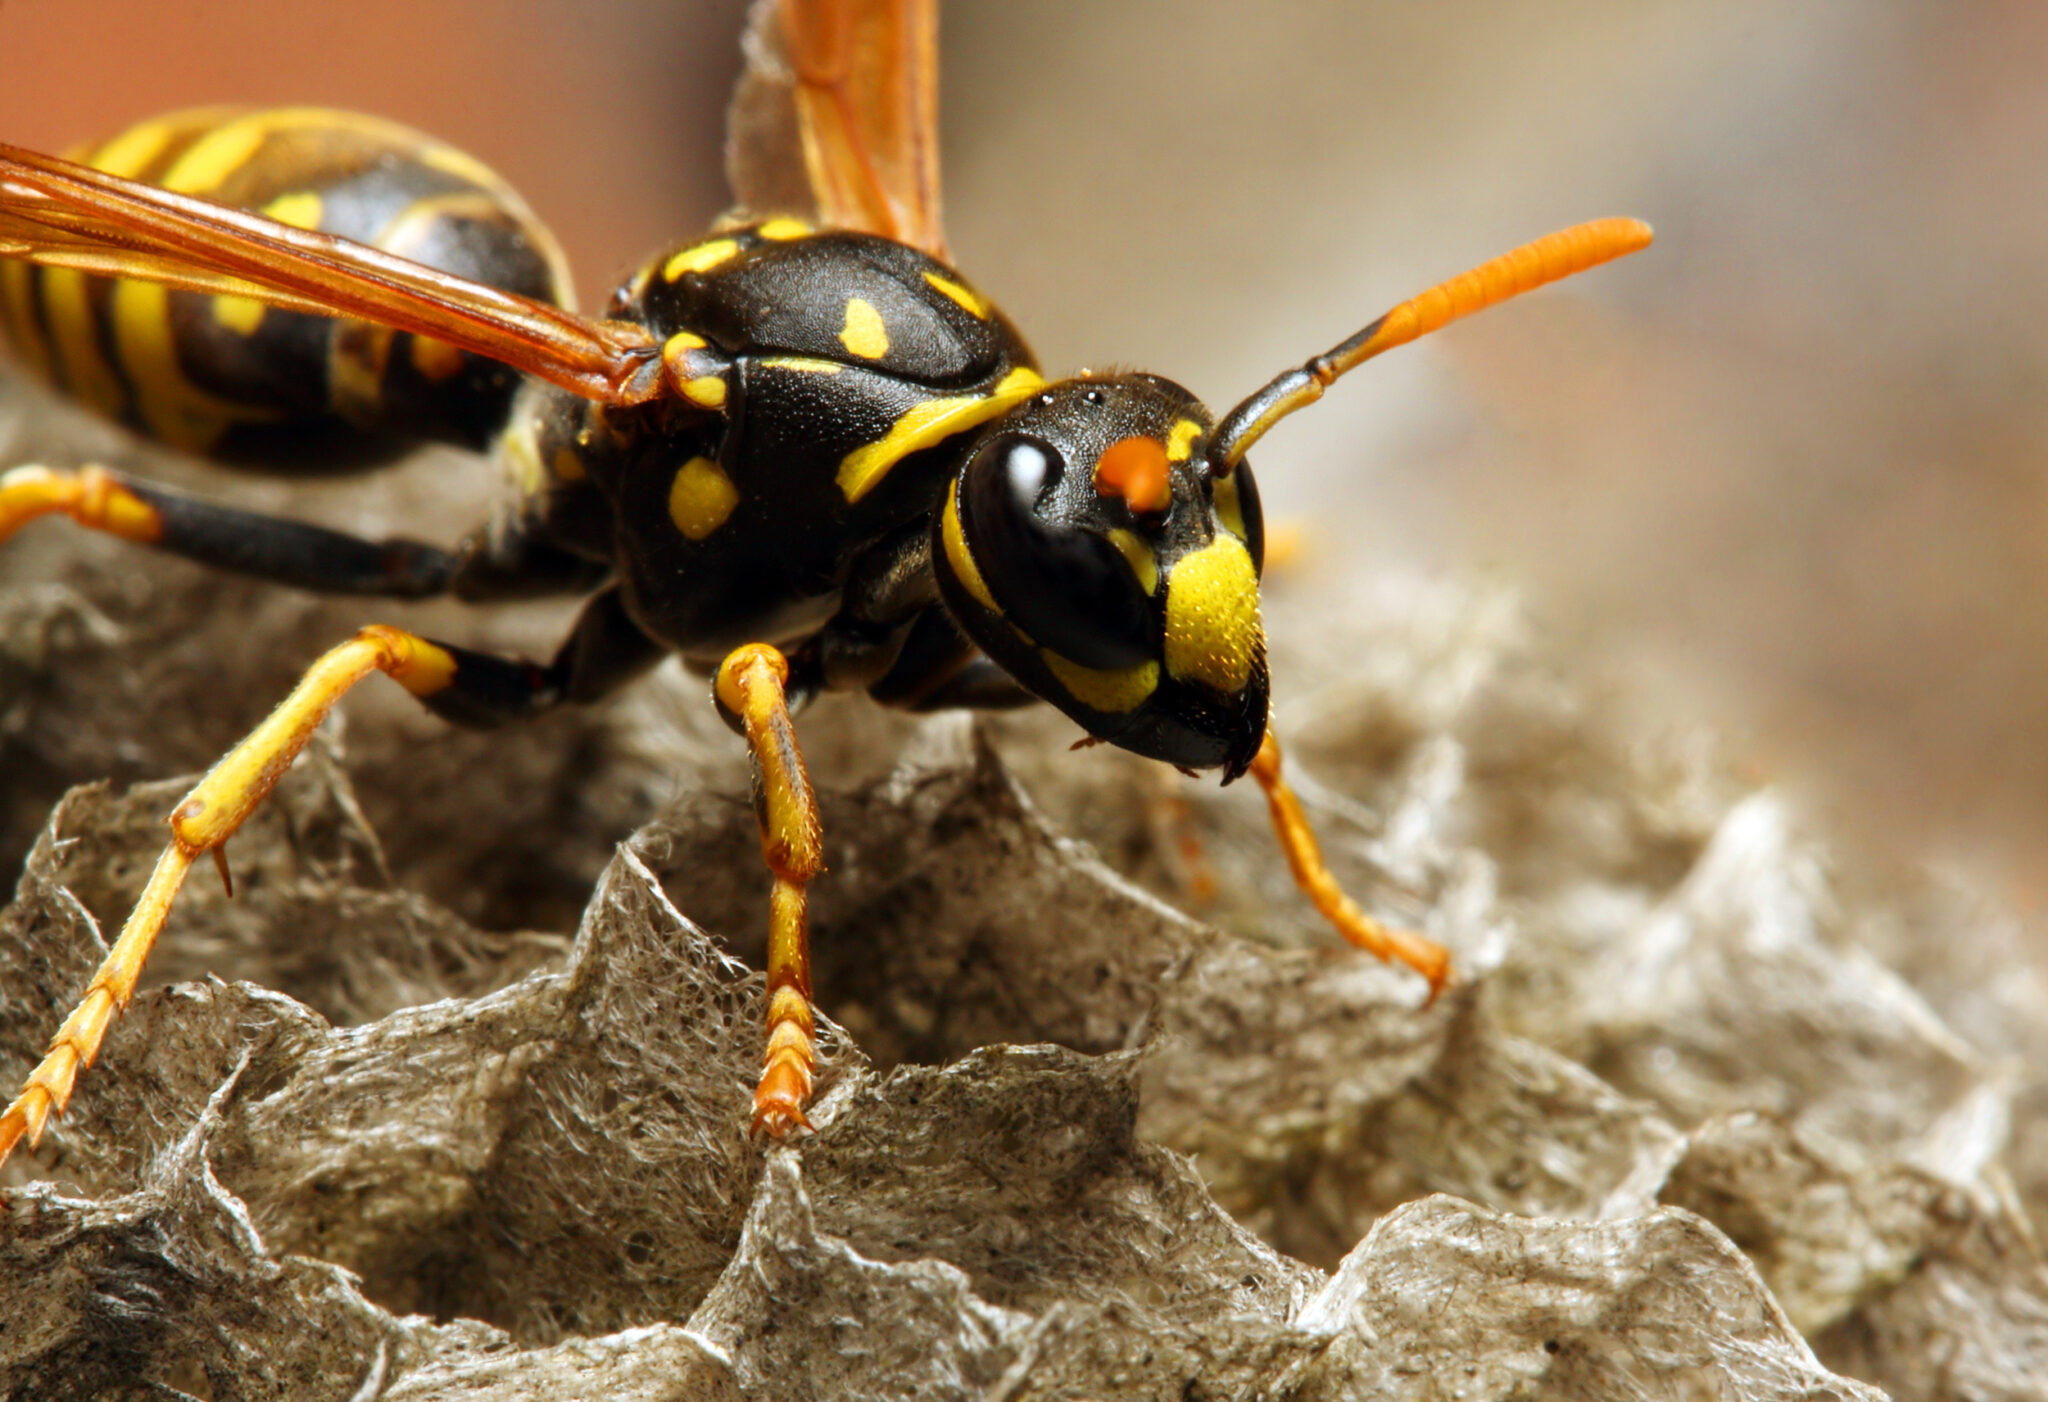 The Yellow Jacket Wasp.